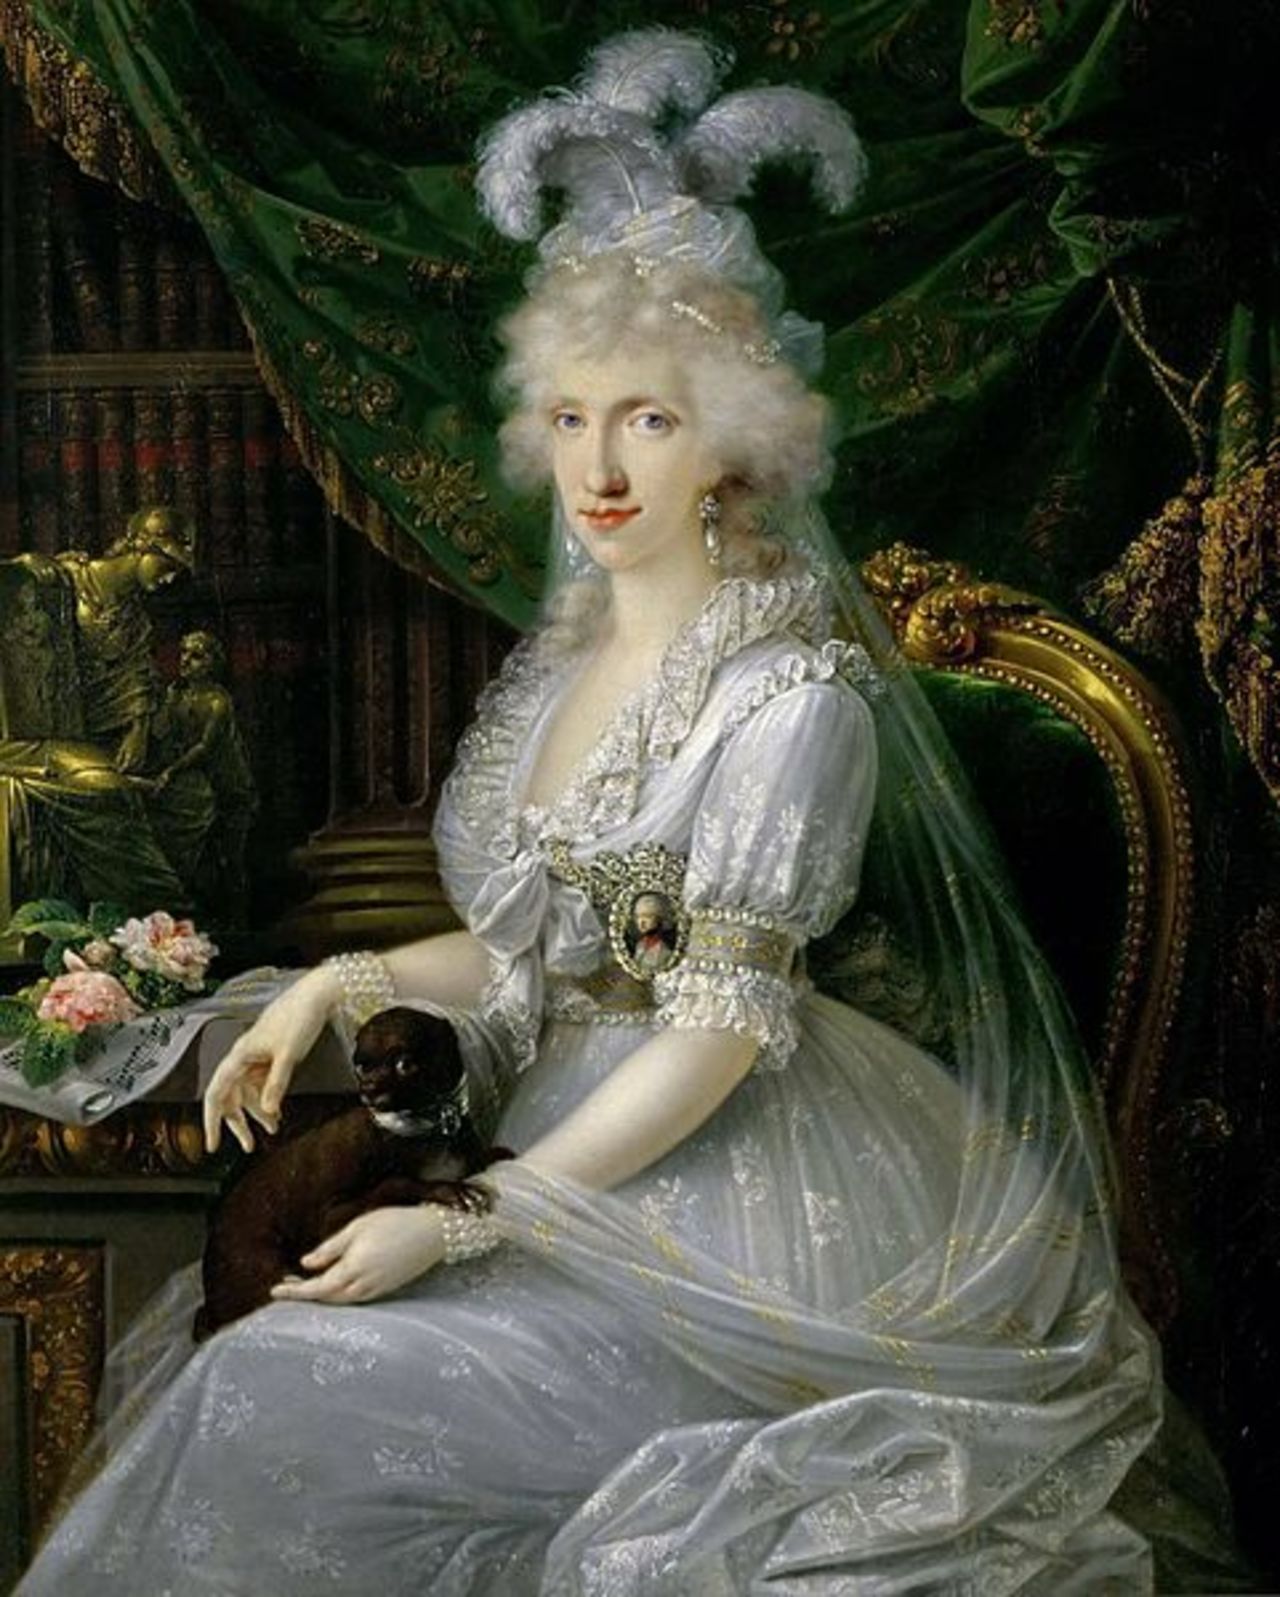 Portrait of Princess Luisa of Naples and Sicily Joseph Dorffmeister ðŸ‡­ðŸ‡º1797  #Art #detail  Happy start of new week!  @Amyperuana @angelicadisogno @sar_ahza @69quietgirl  https://t.co/h5Xnc08mf1